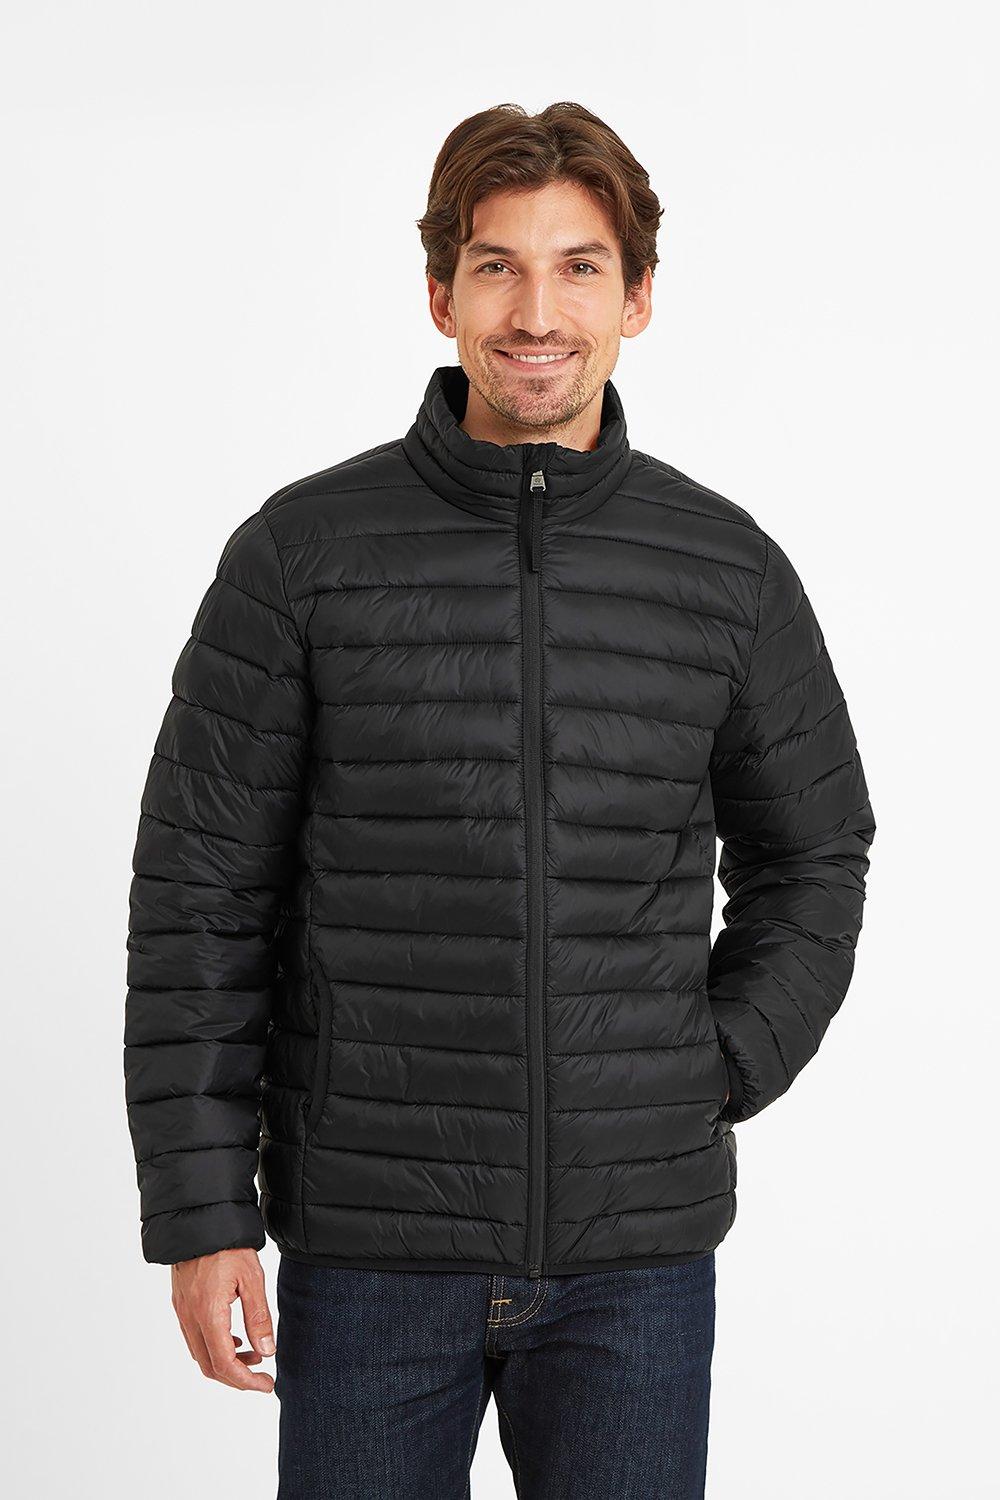 Hollister large hooded denim jacket retail price of... - Depop